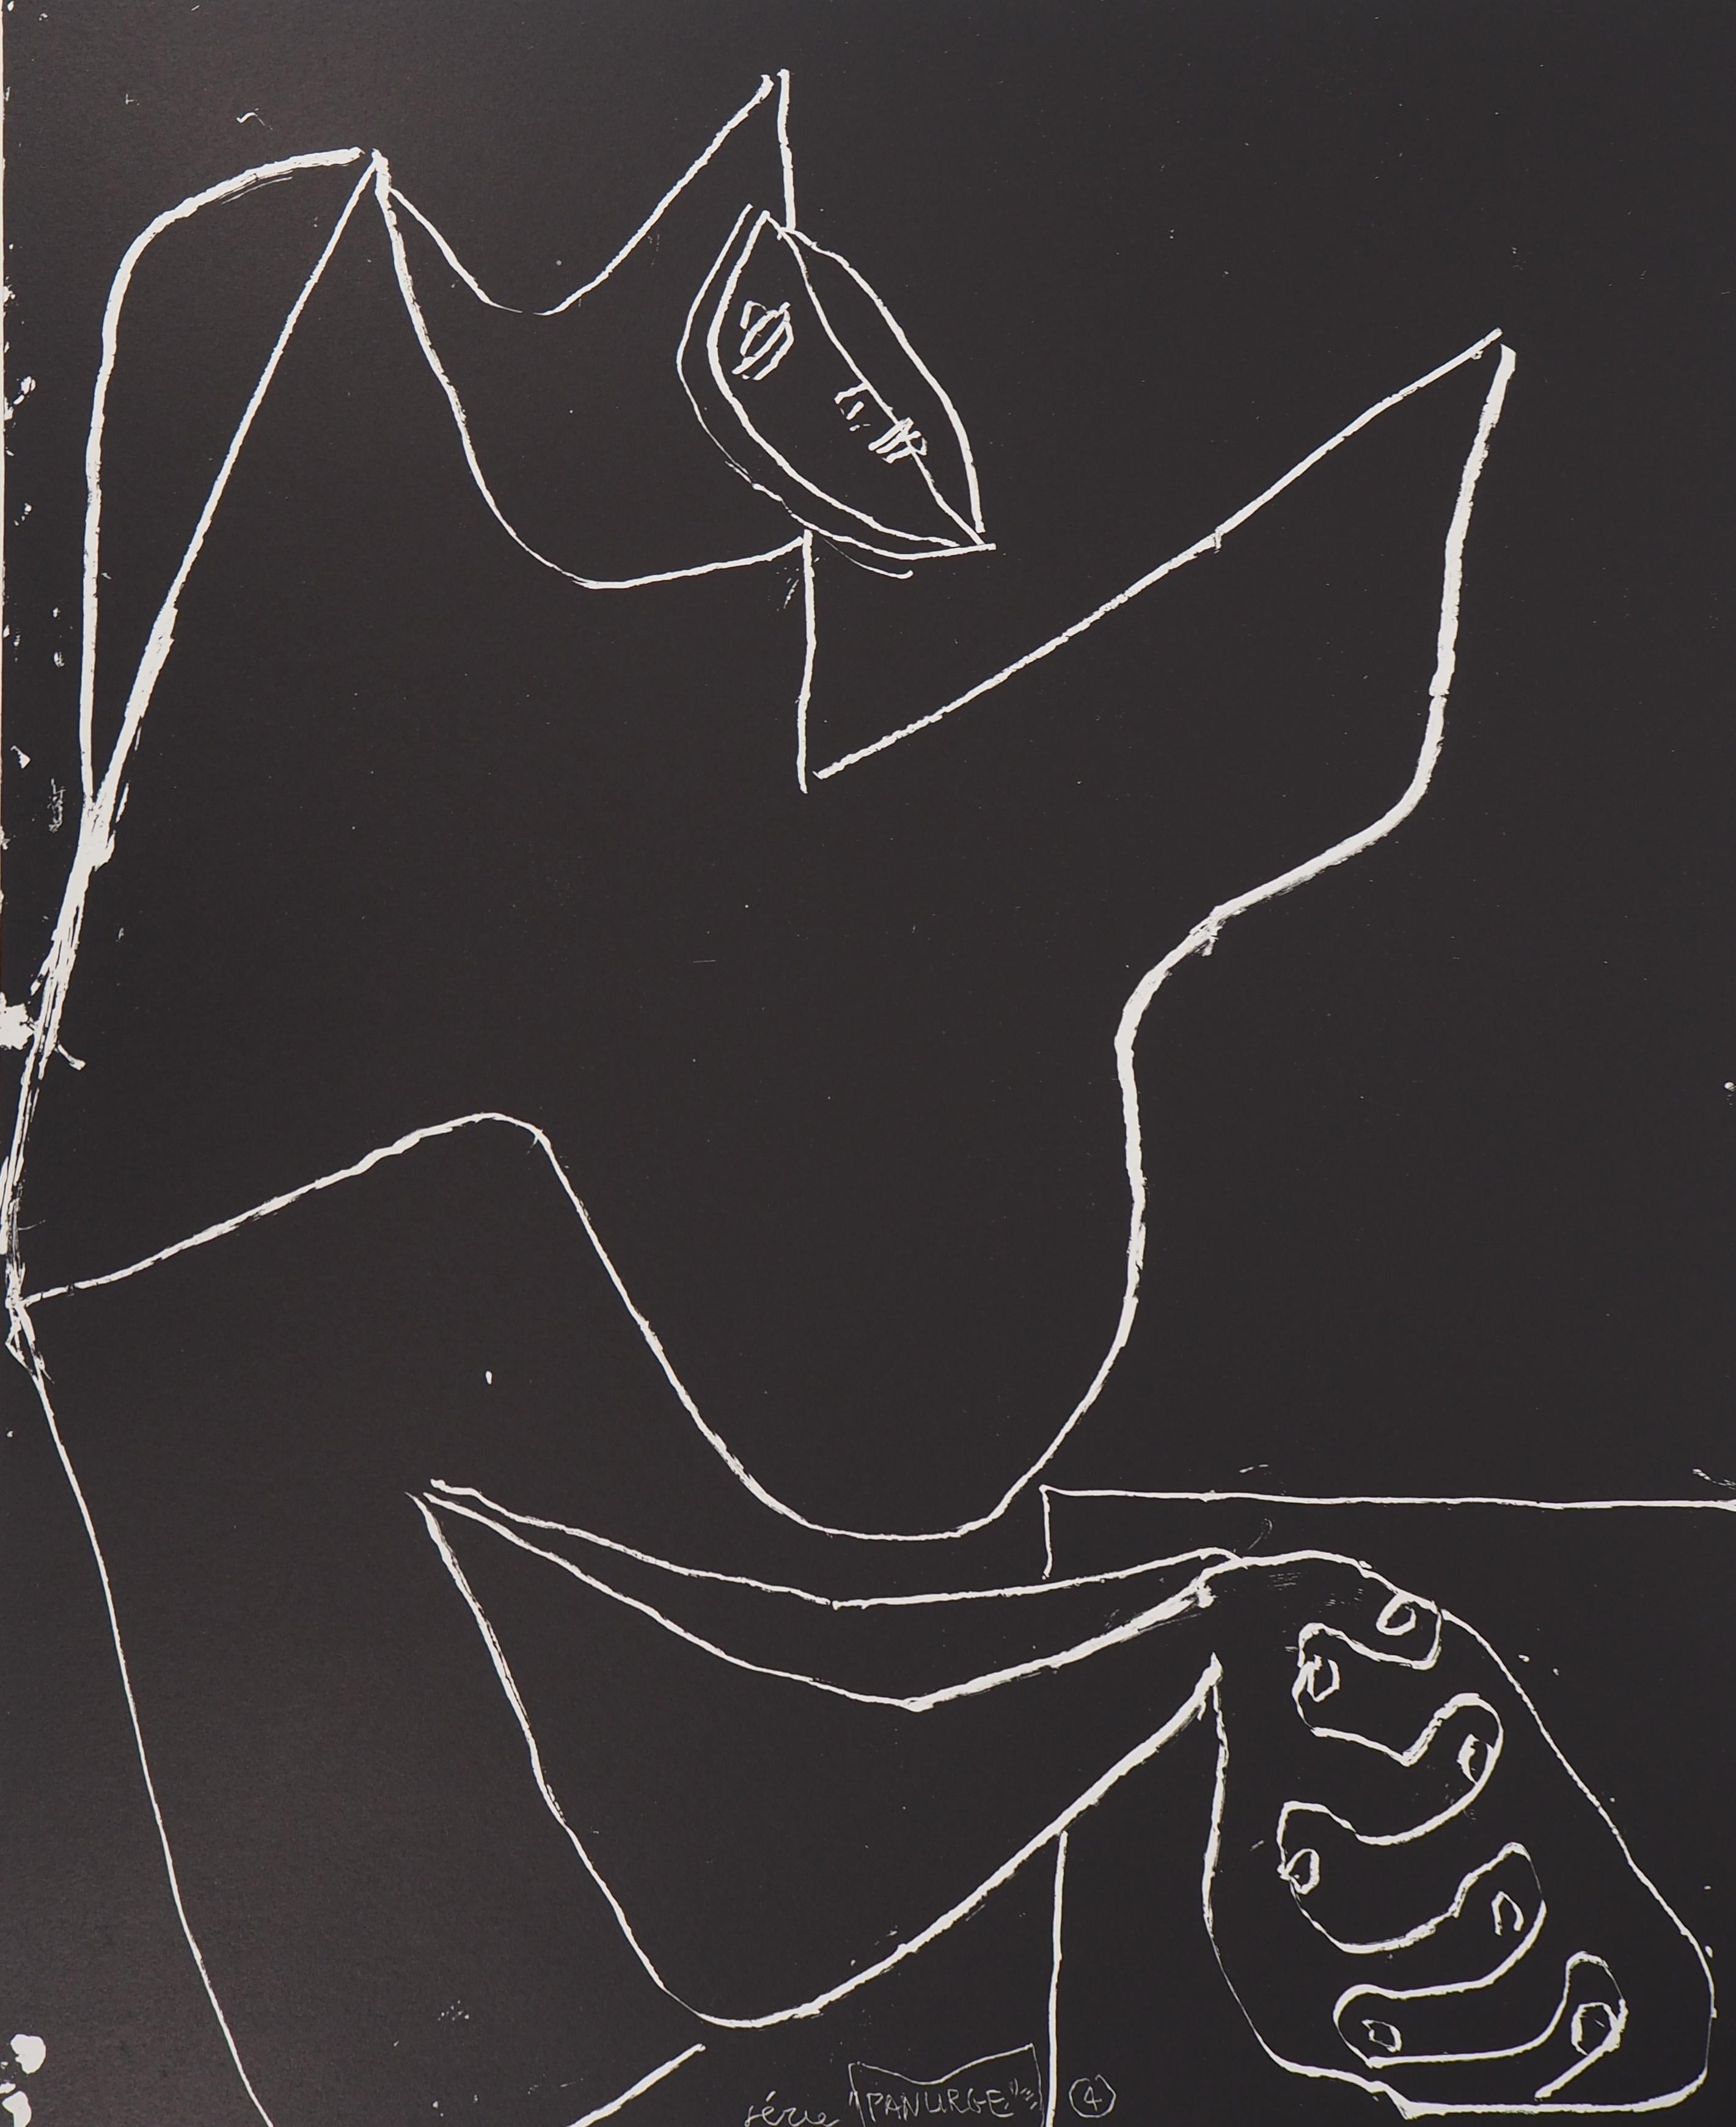 Hands and Dancer - Original Lithograph (Mourlot) - Black Figurative Print by Le Corbusier